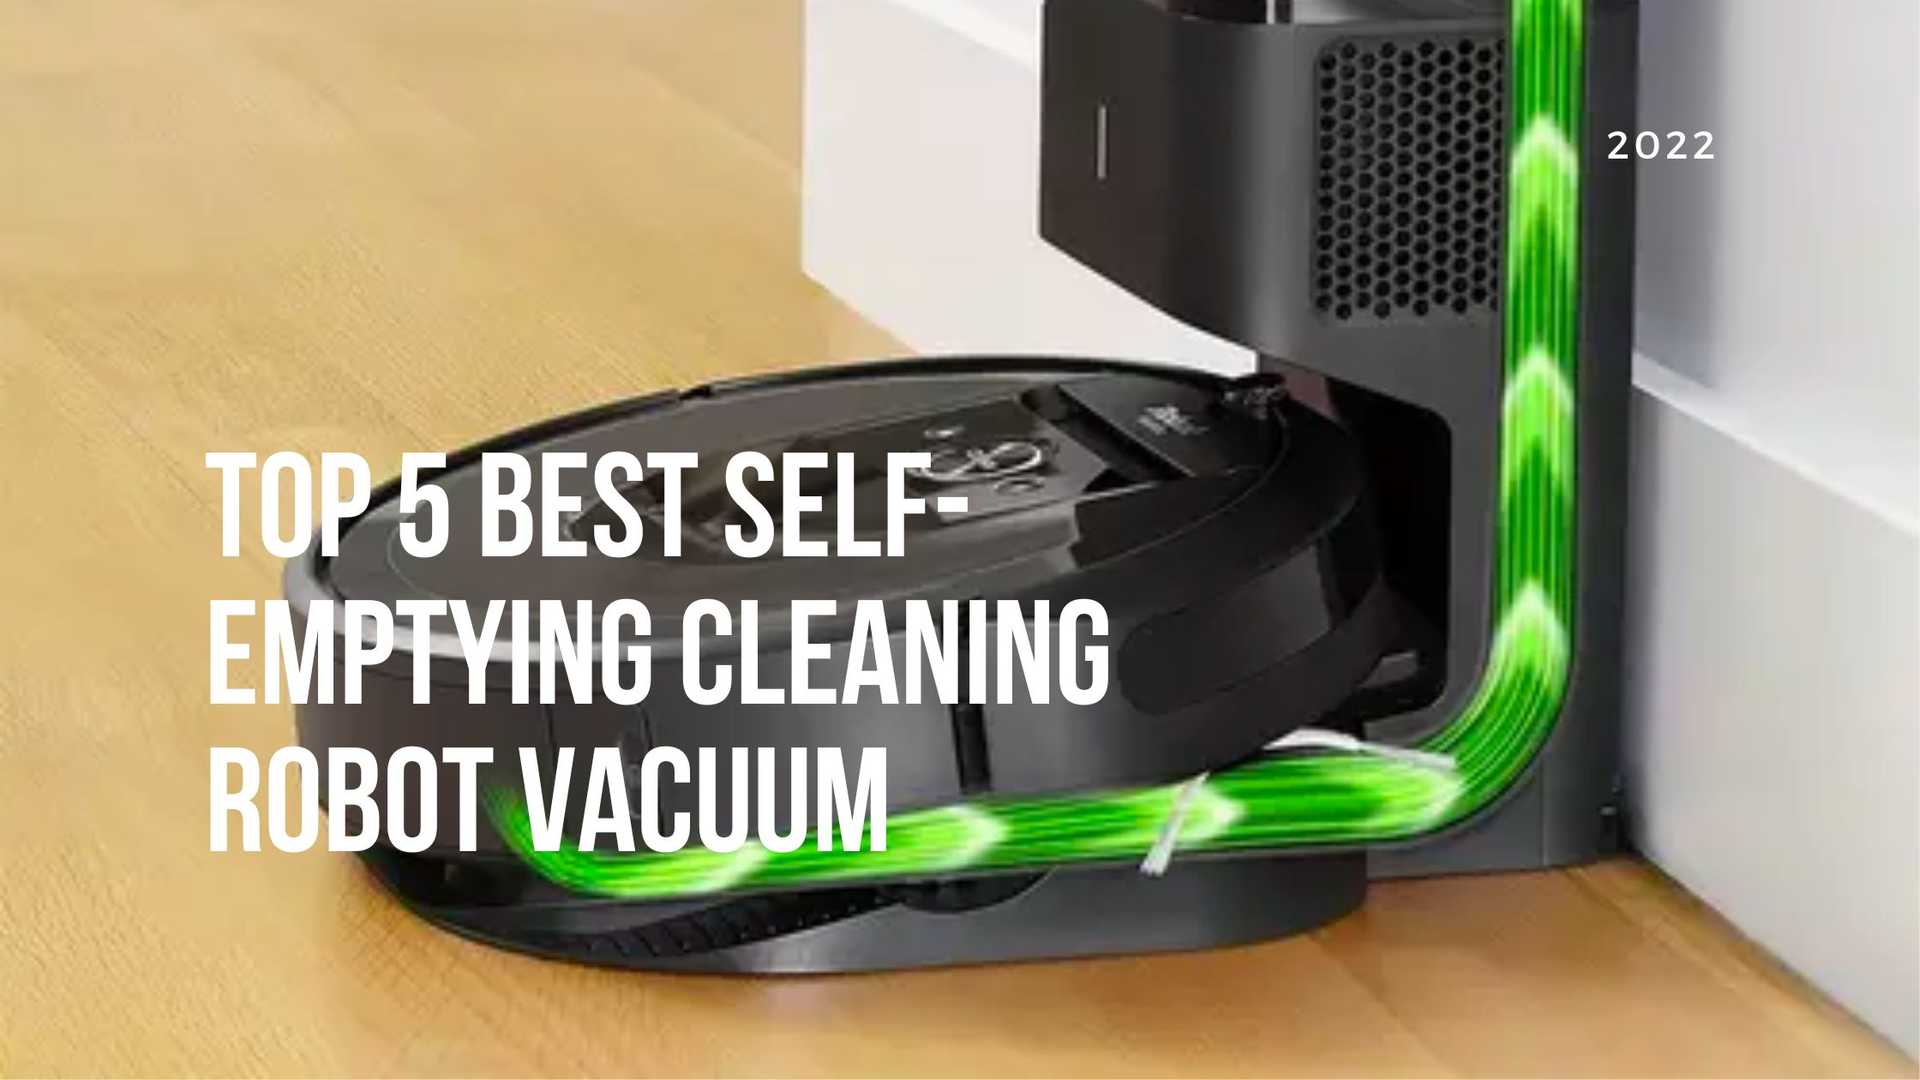 Top 5 Best Self-Emptying Cleaning Robot Vacuum 2022